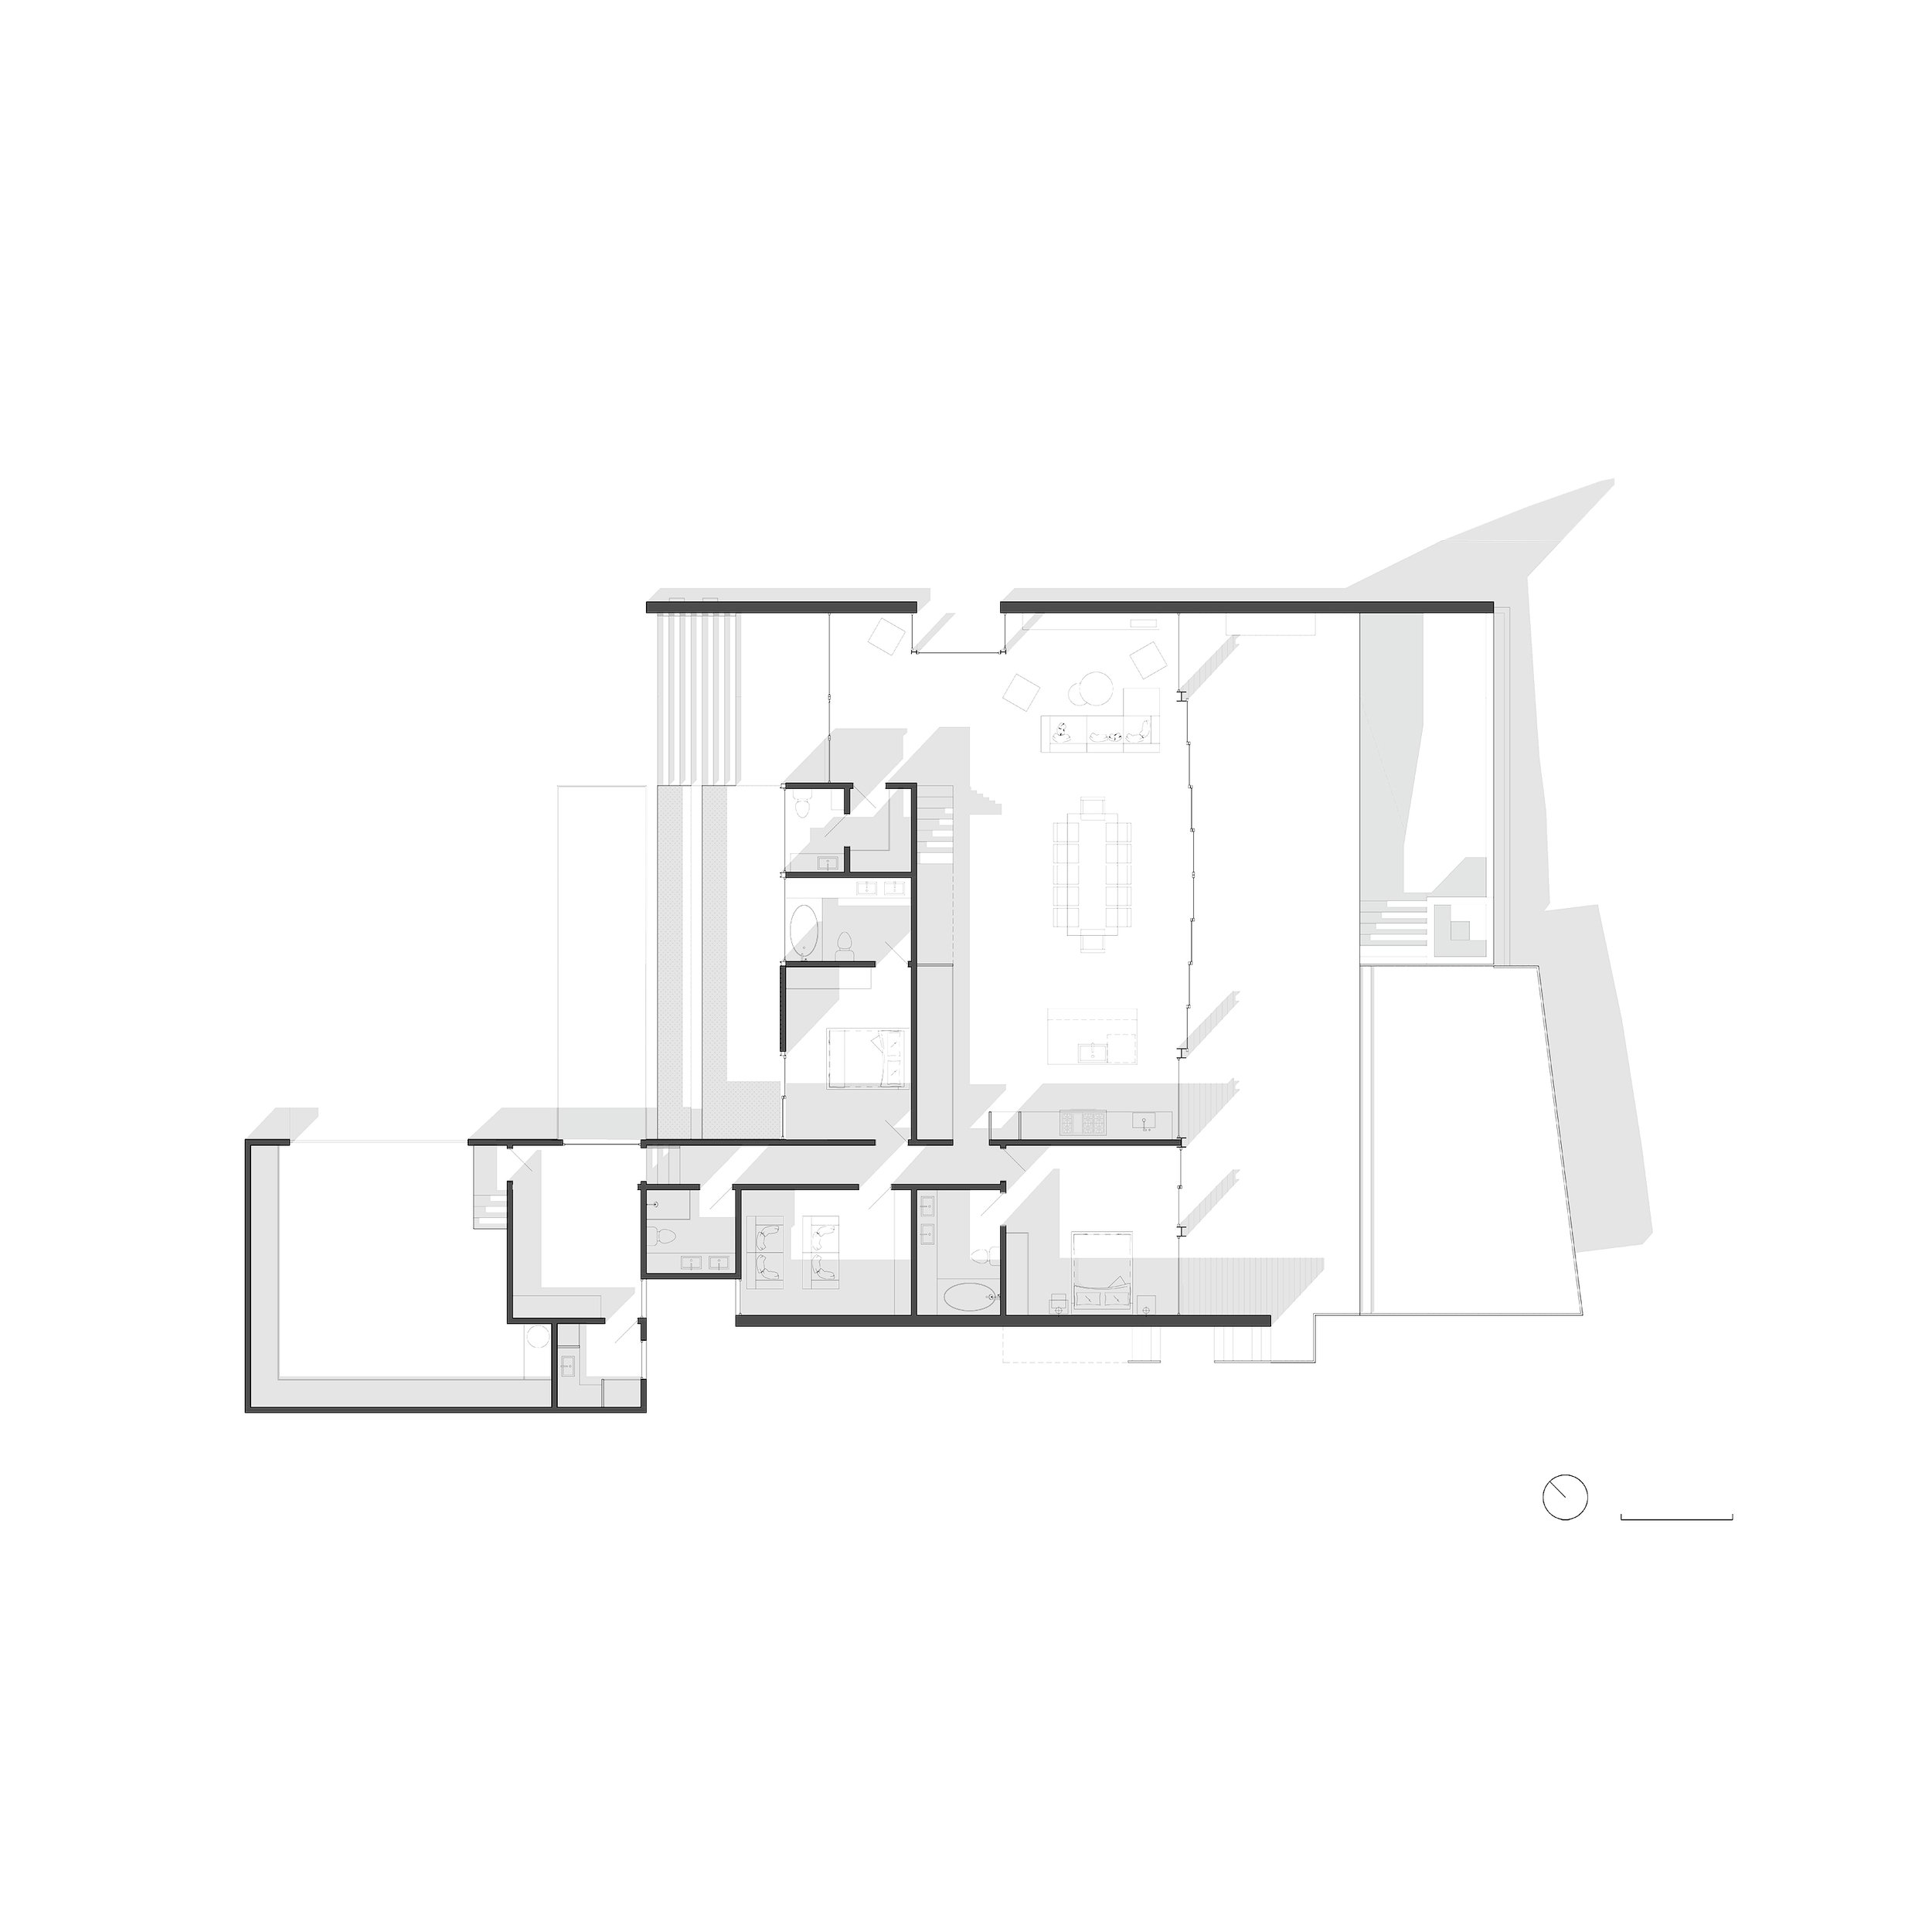 FHR_First Floor Plan - Shadows_small.jpg